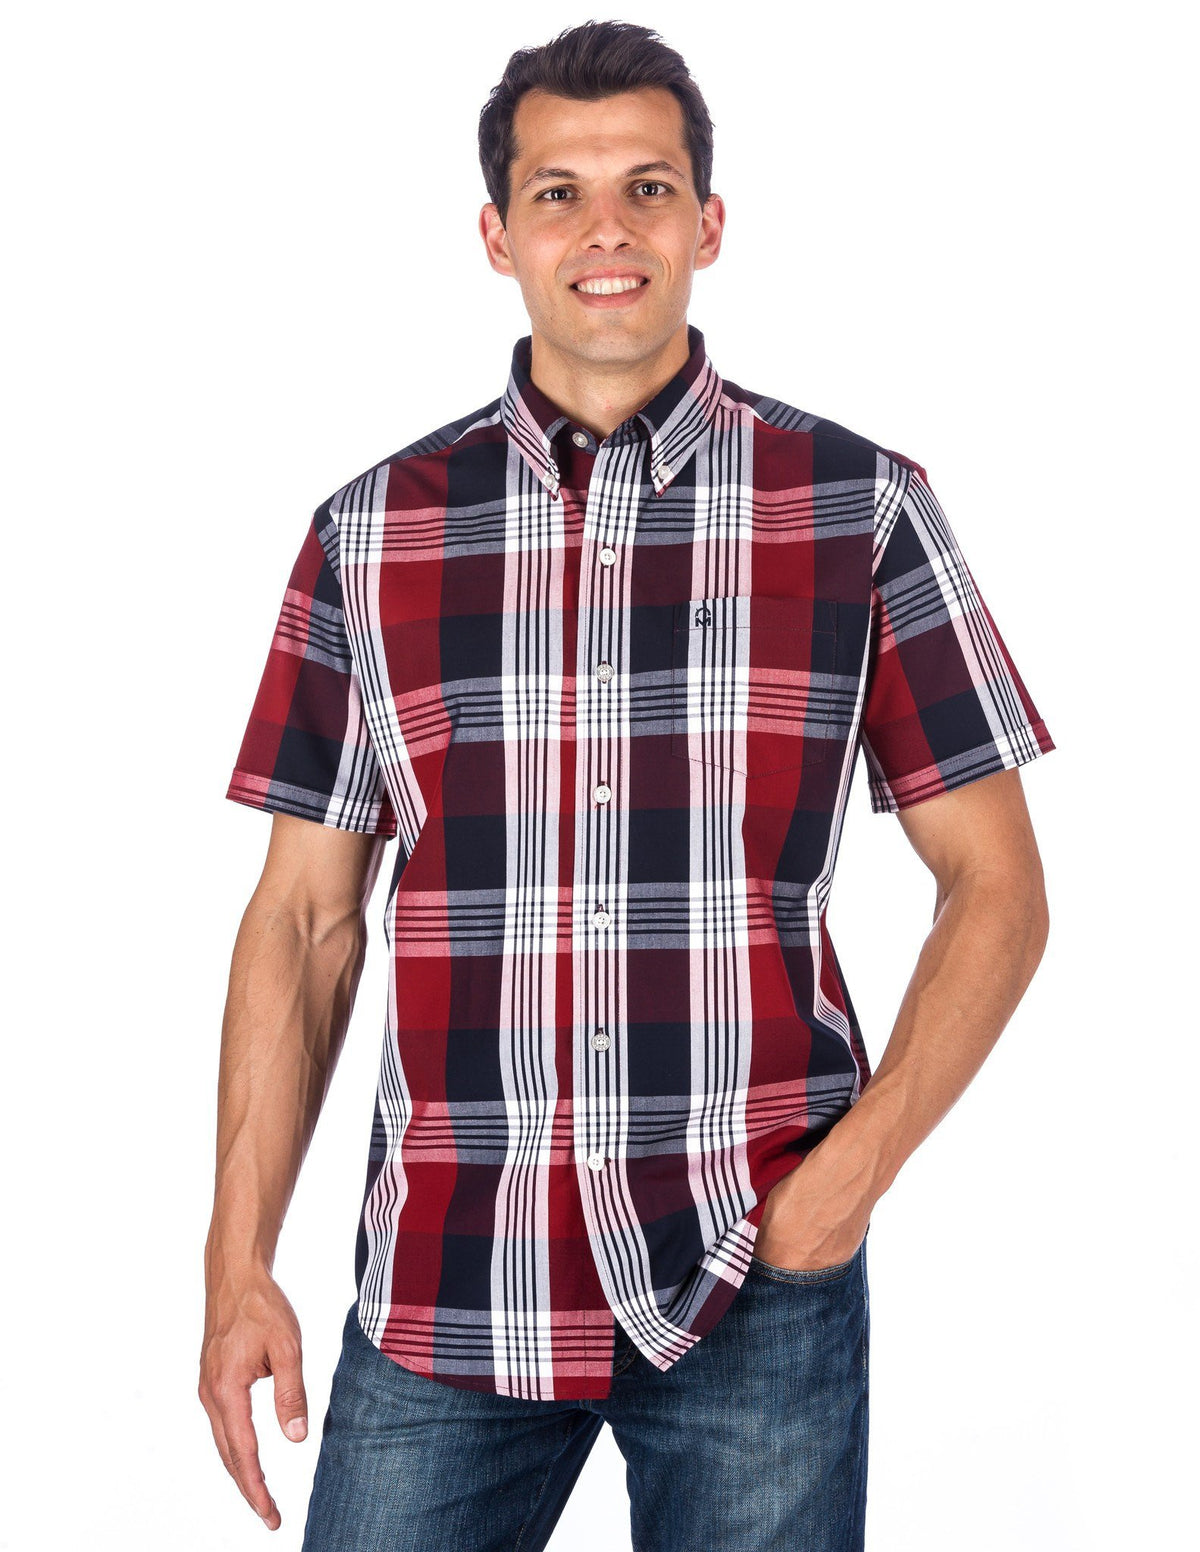 Men's 100% Cotton Casual Short Sleeve Shirt - Regular Fit - Stripe Plaid Red/Navy